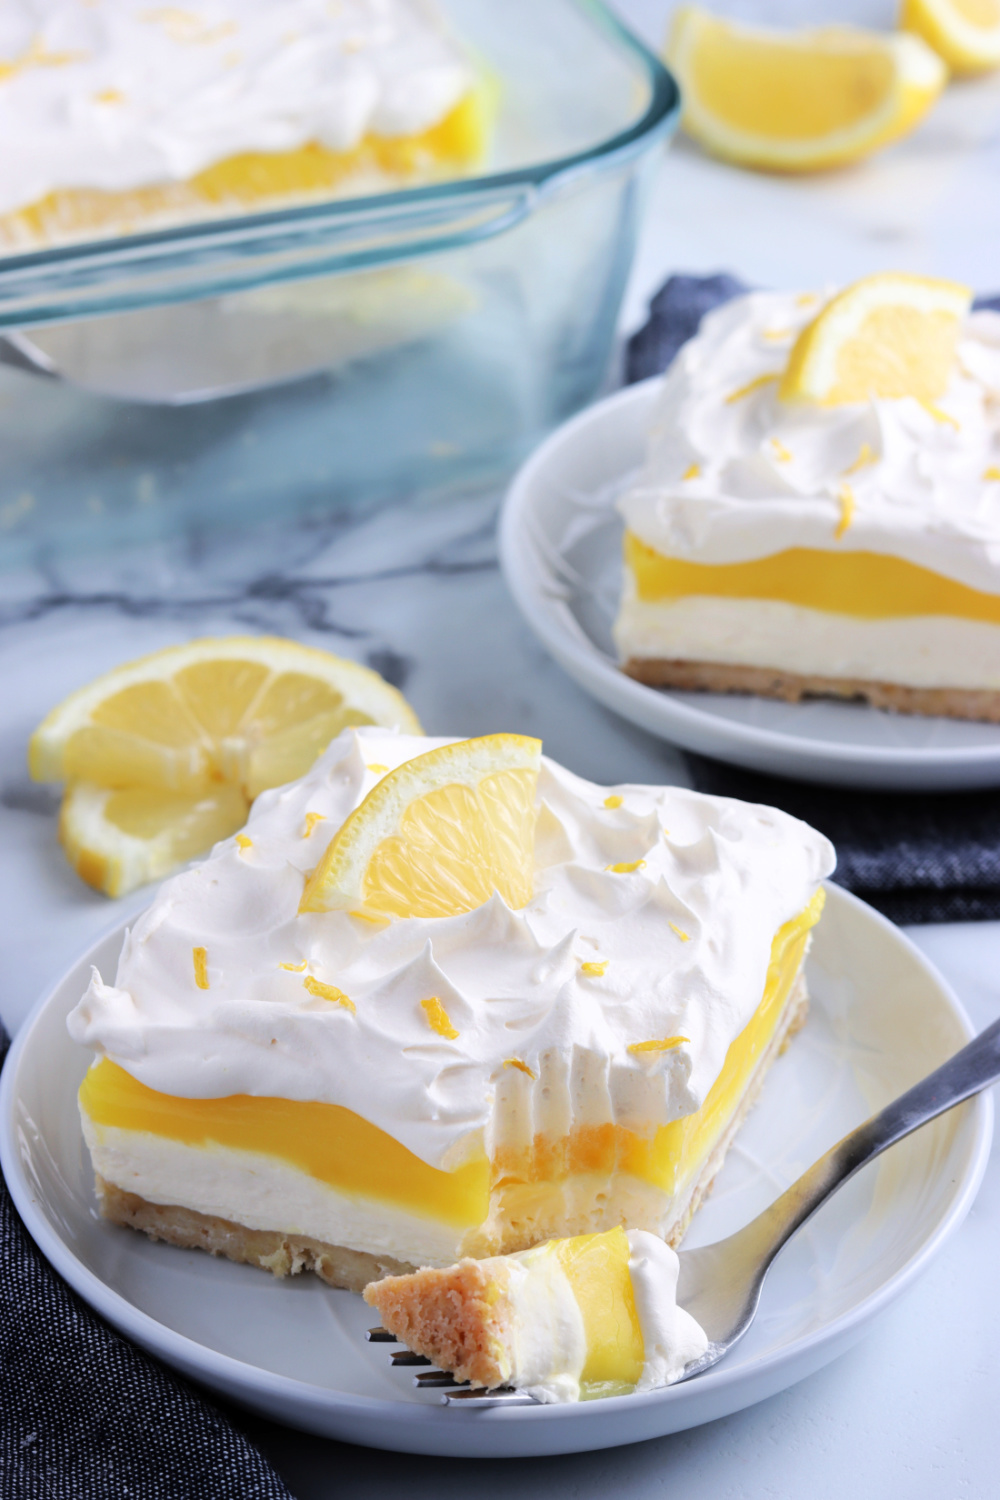 two pieces of lemon lush cake on plates